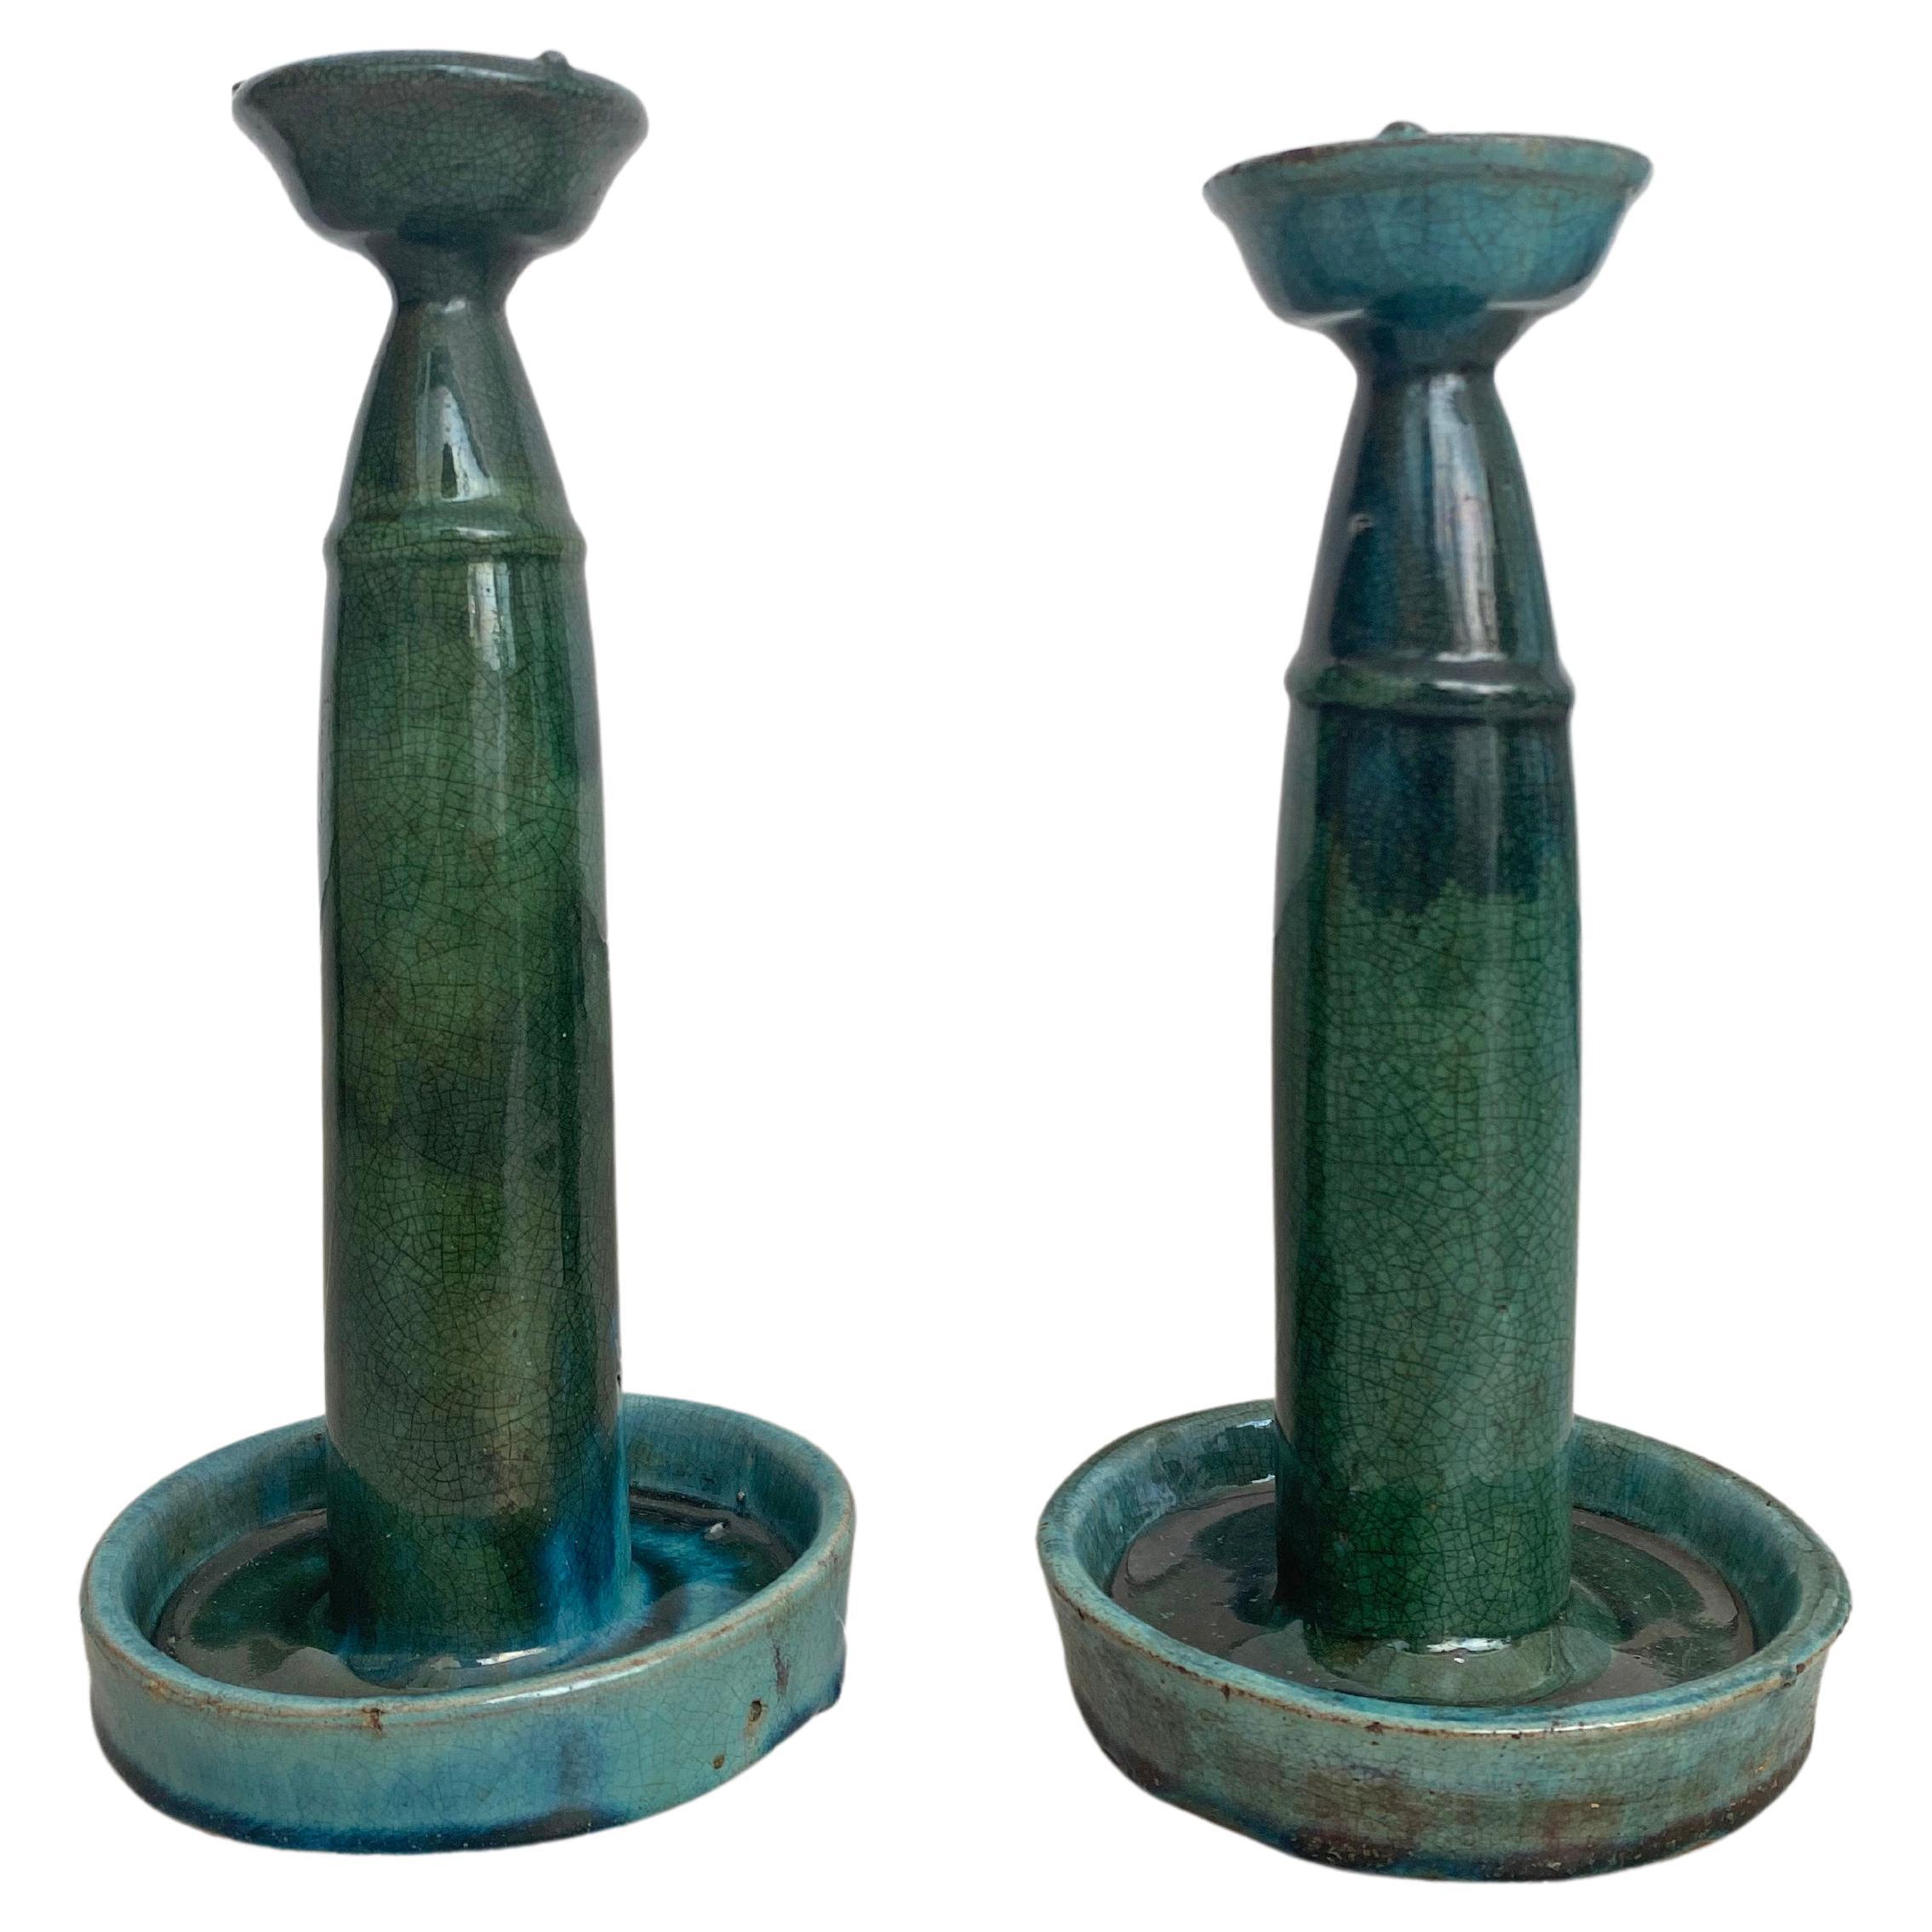 Chinesische Keramik 'Shiwan' Öllampe / Kerzenhalter-Set, grün glasiert, um 1900